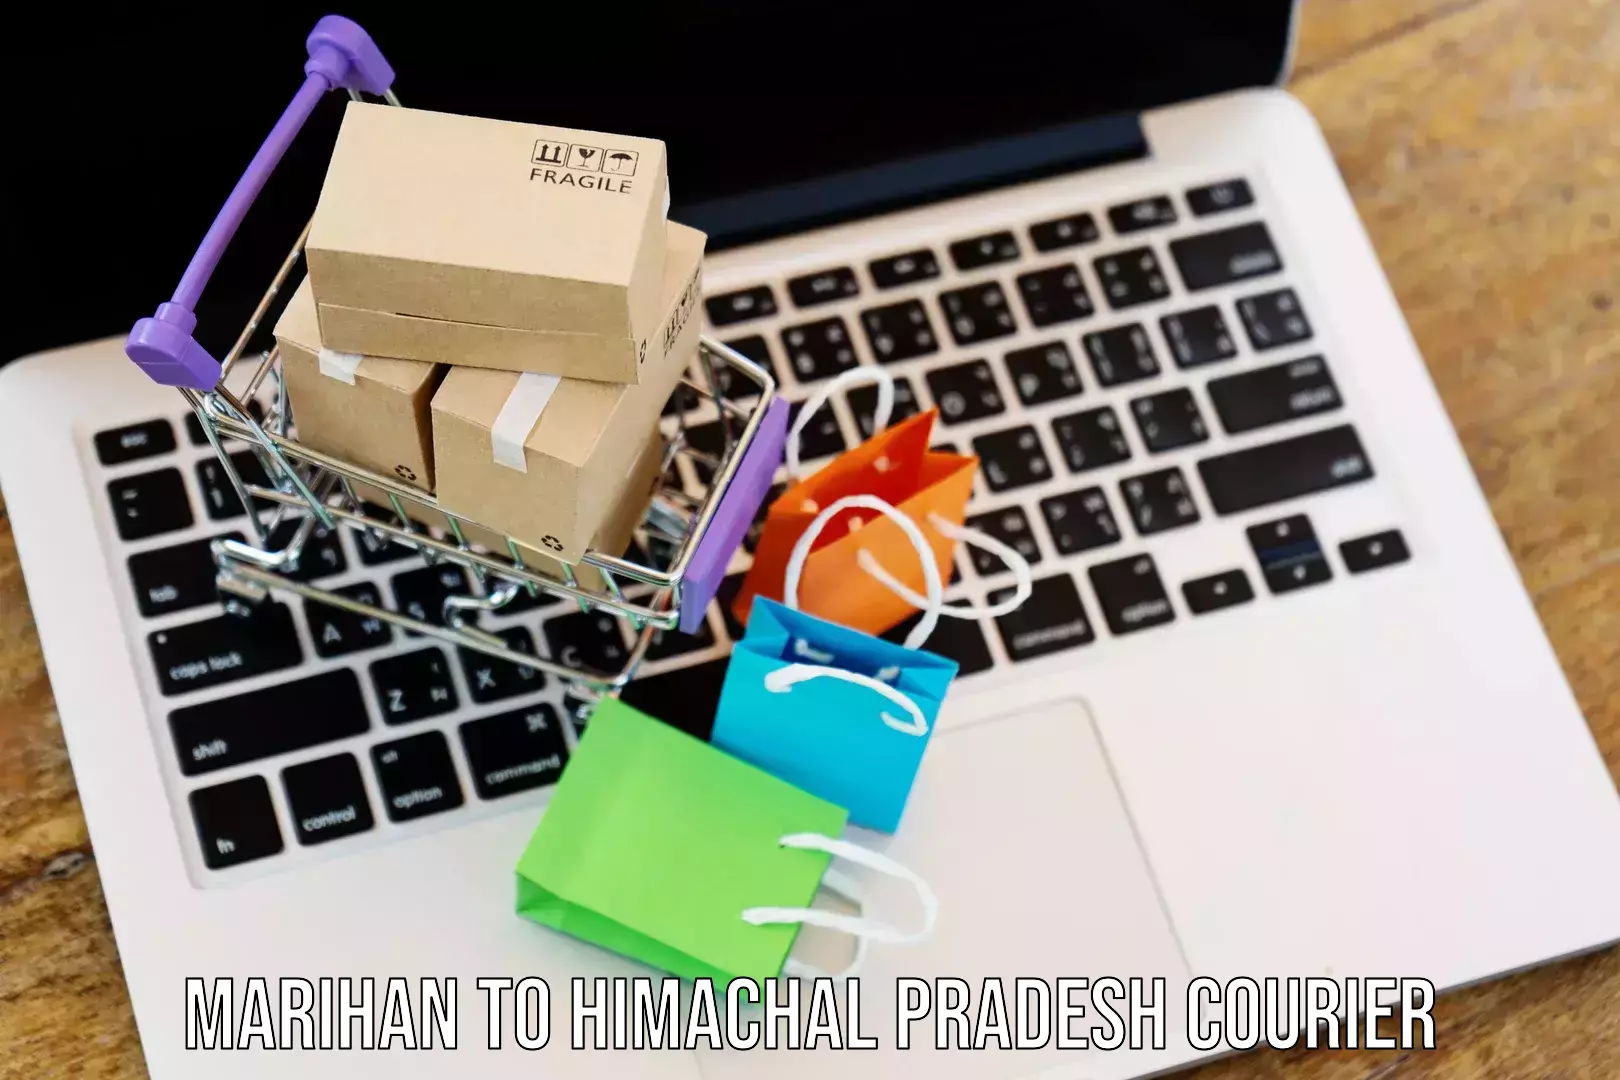 Custom courier packaging Marihan to Himachal Pradesh